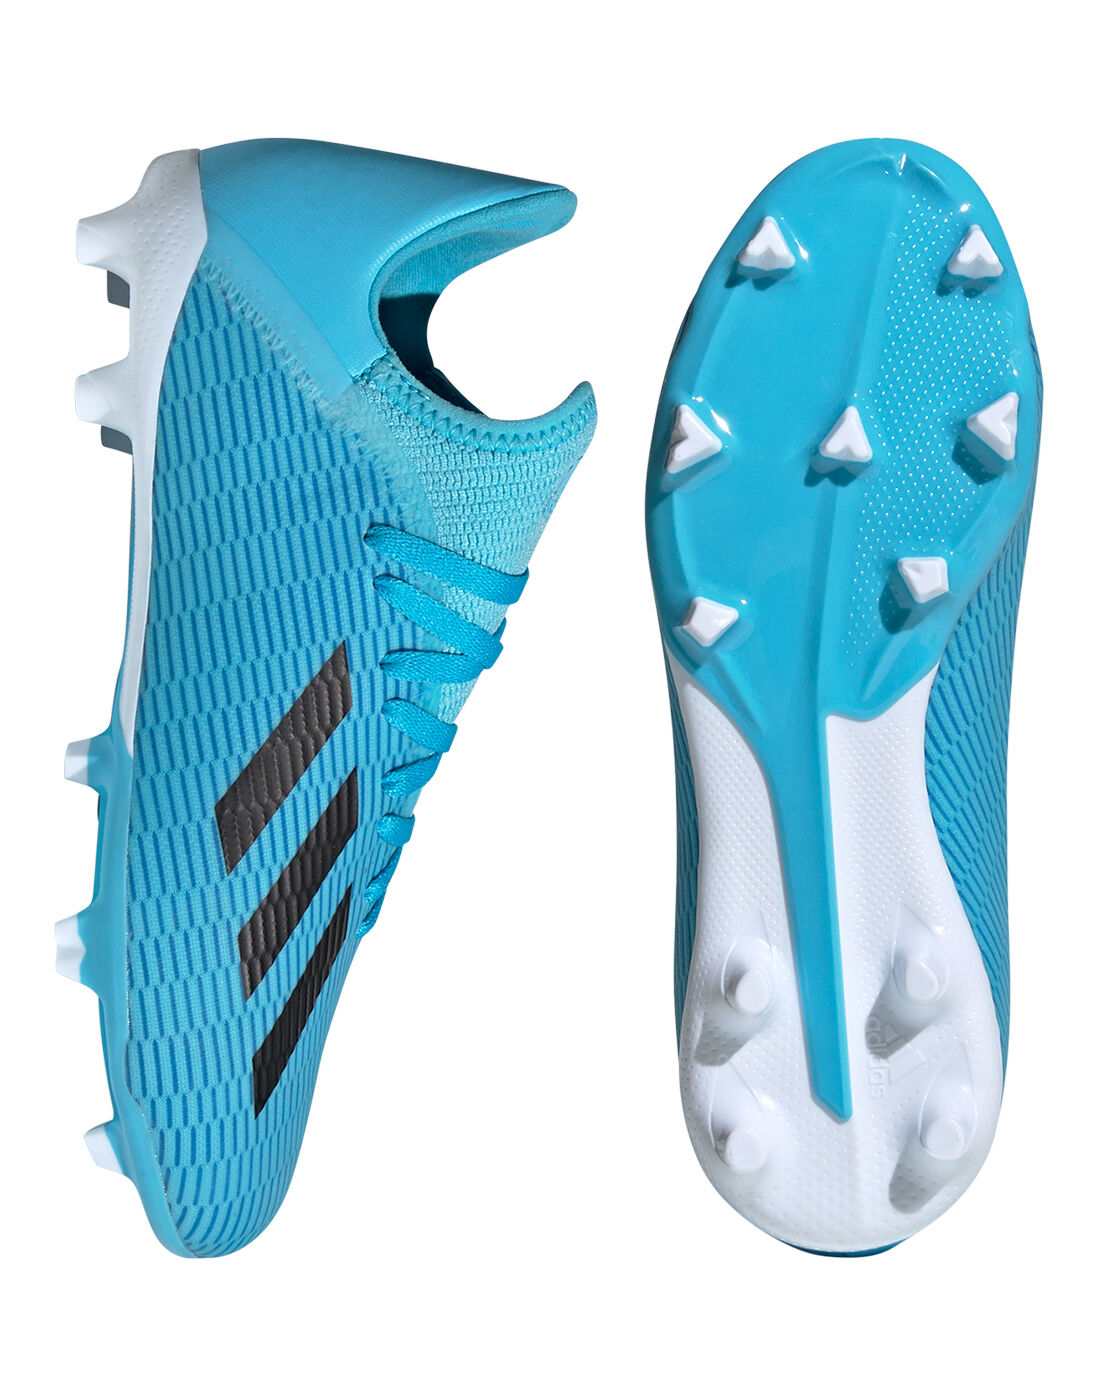 adidas KIDS X 19.3 FG J HARDWIRED - Blue | Life Style Sports IE